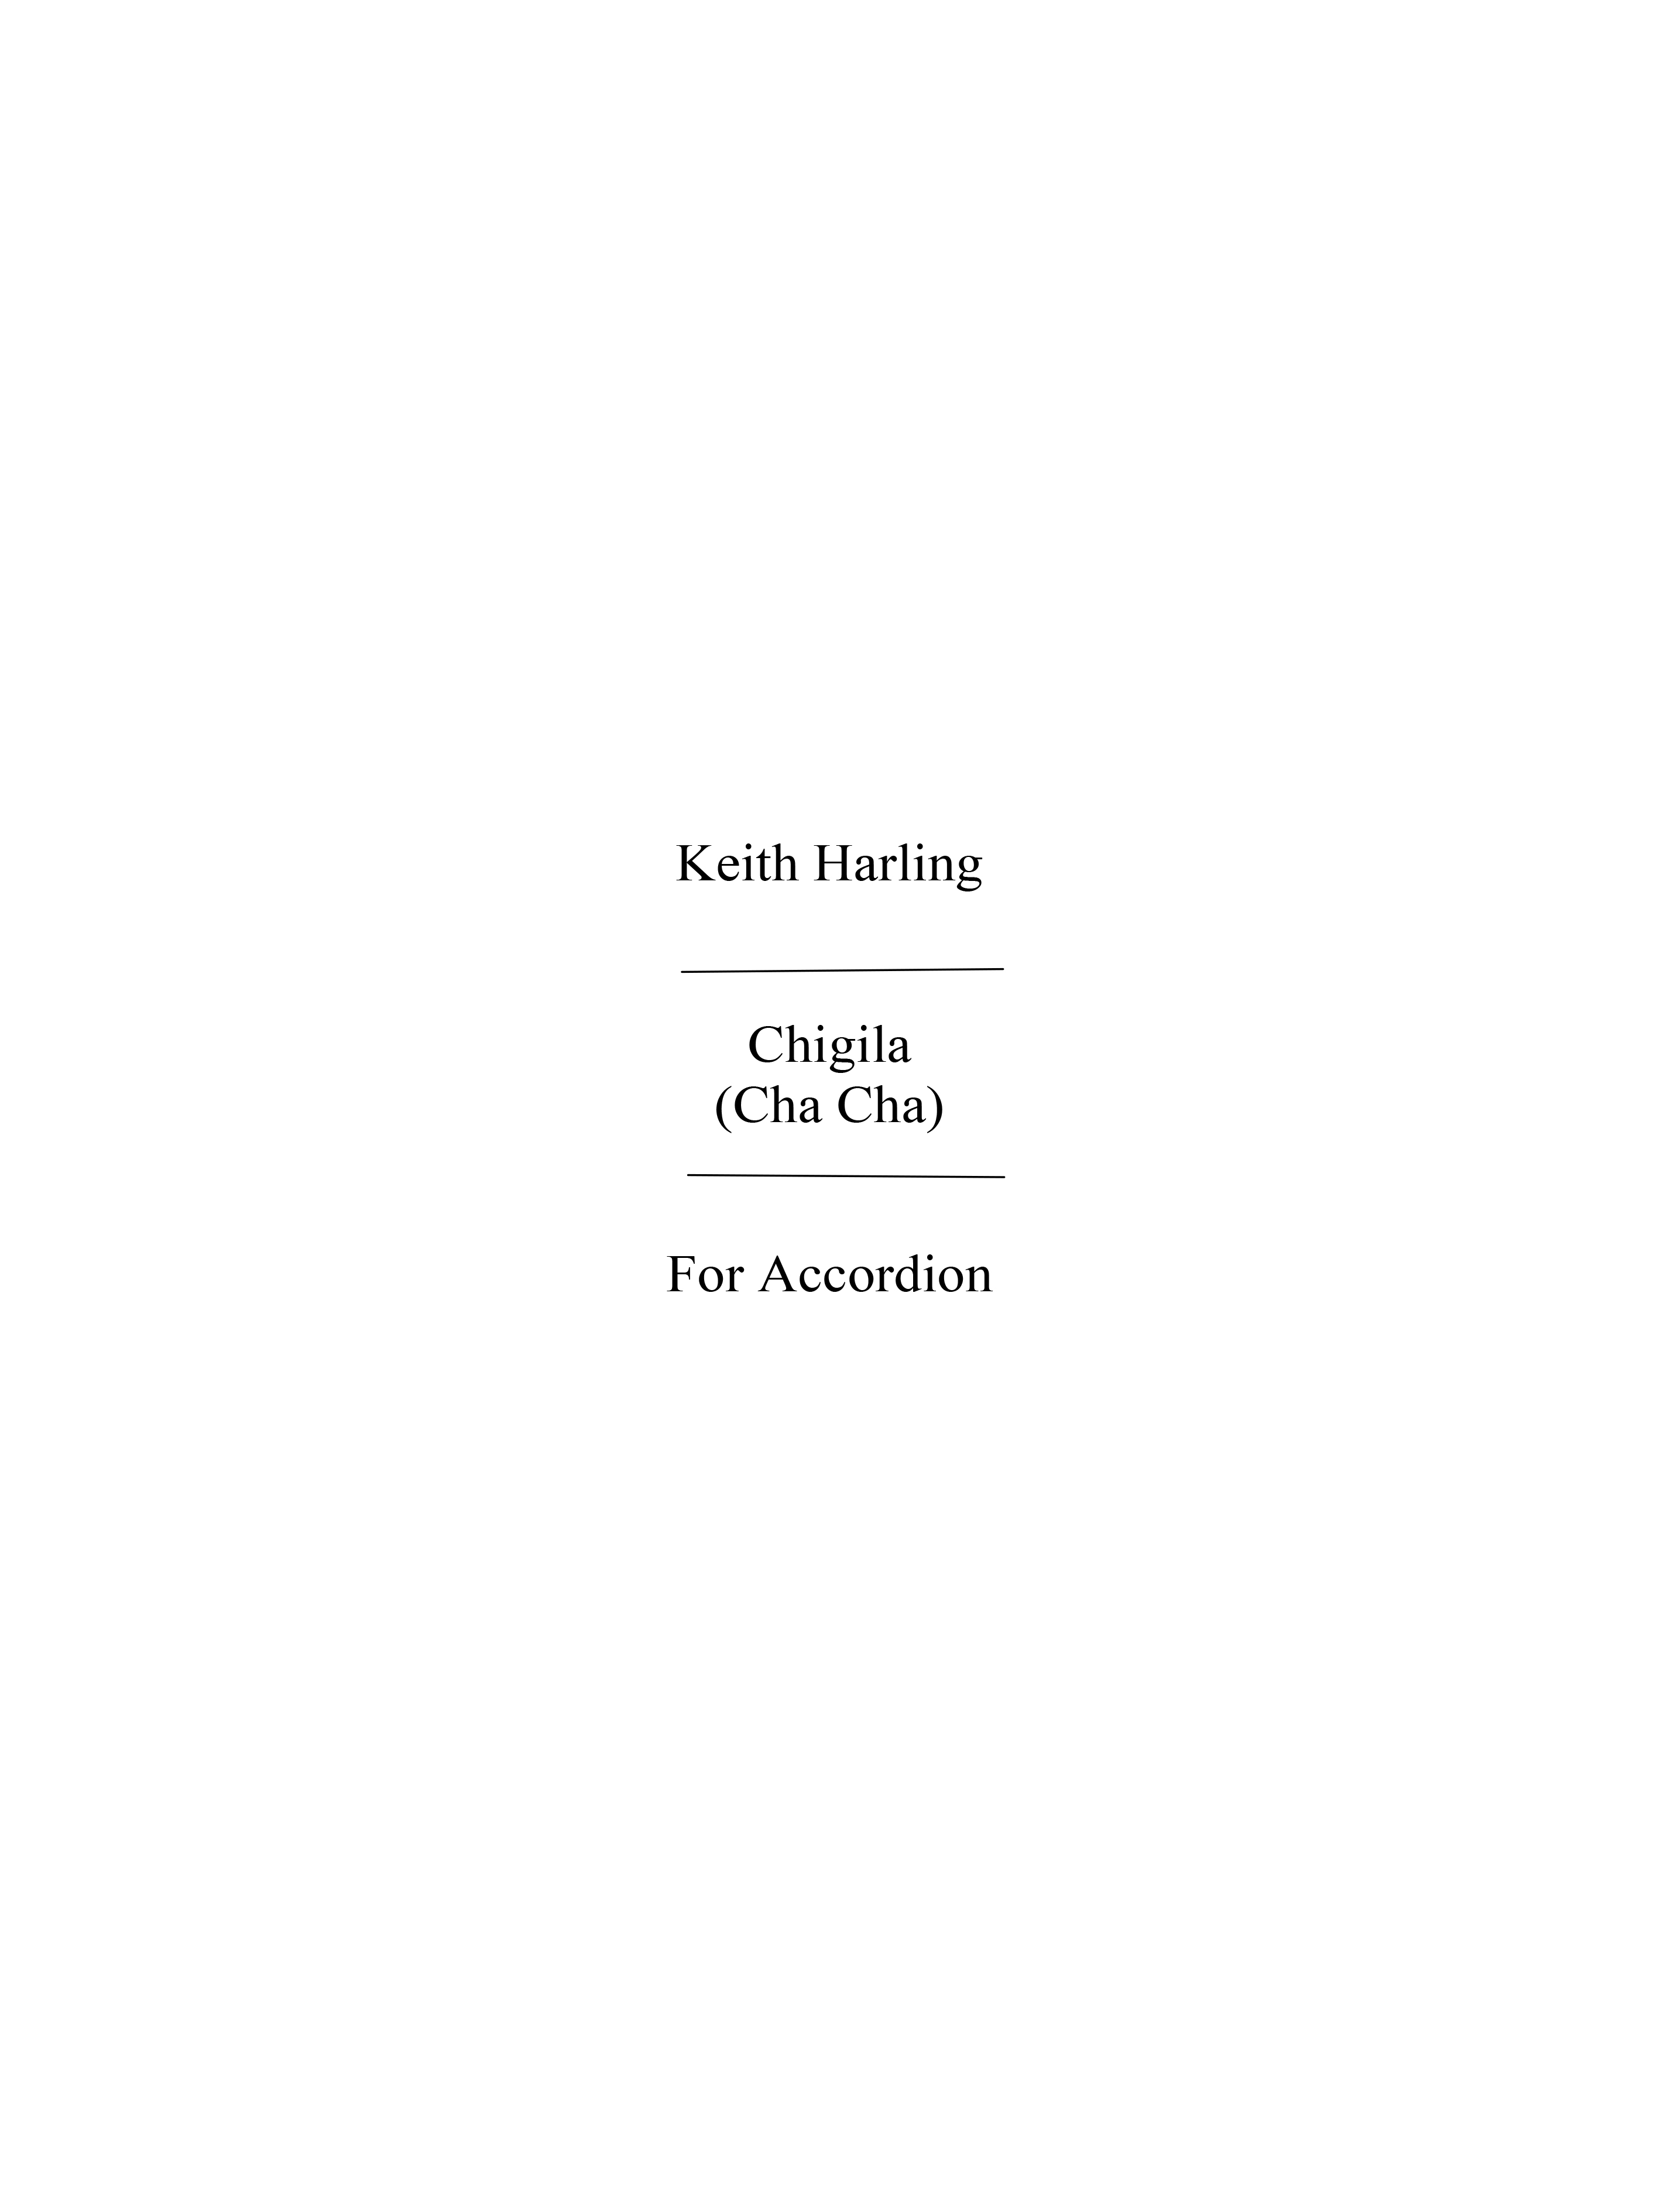 Keith Harling: Keith Harling: Chigila: Accordion: Instrumental Work